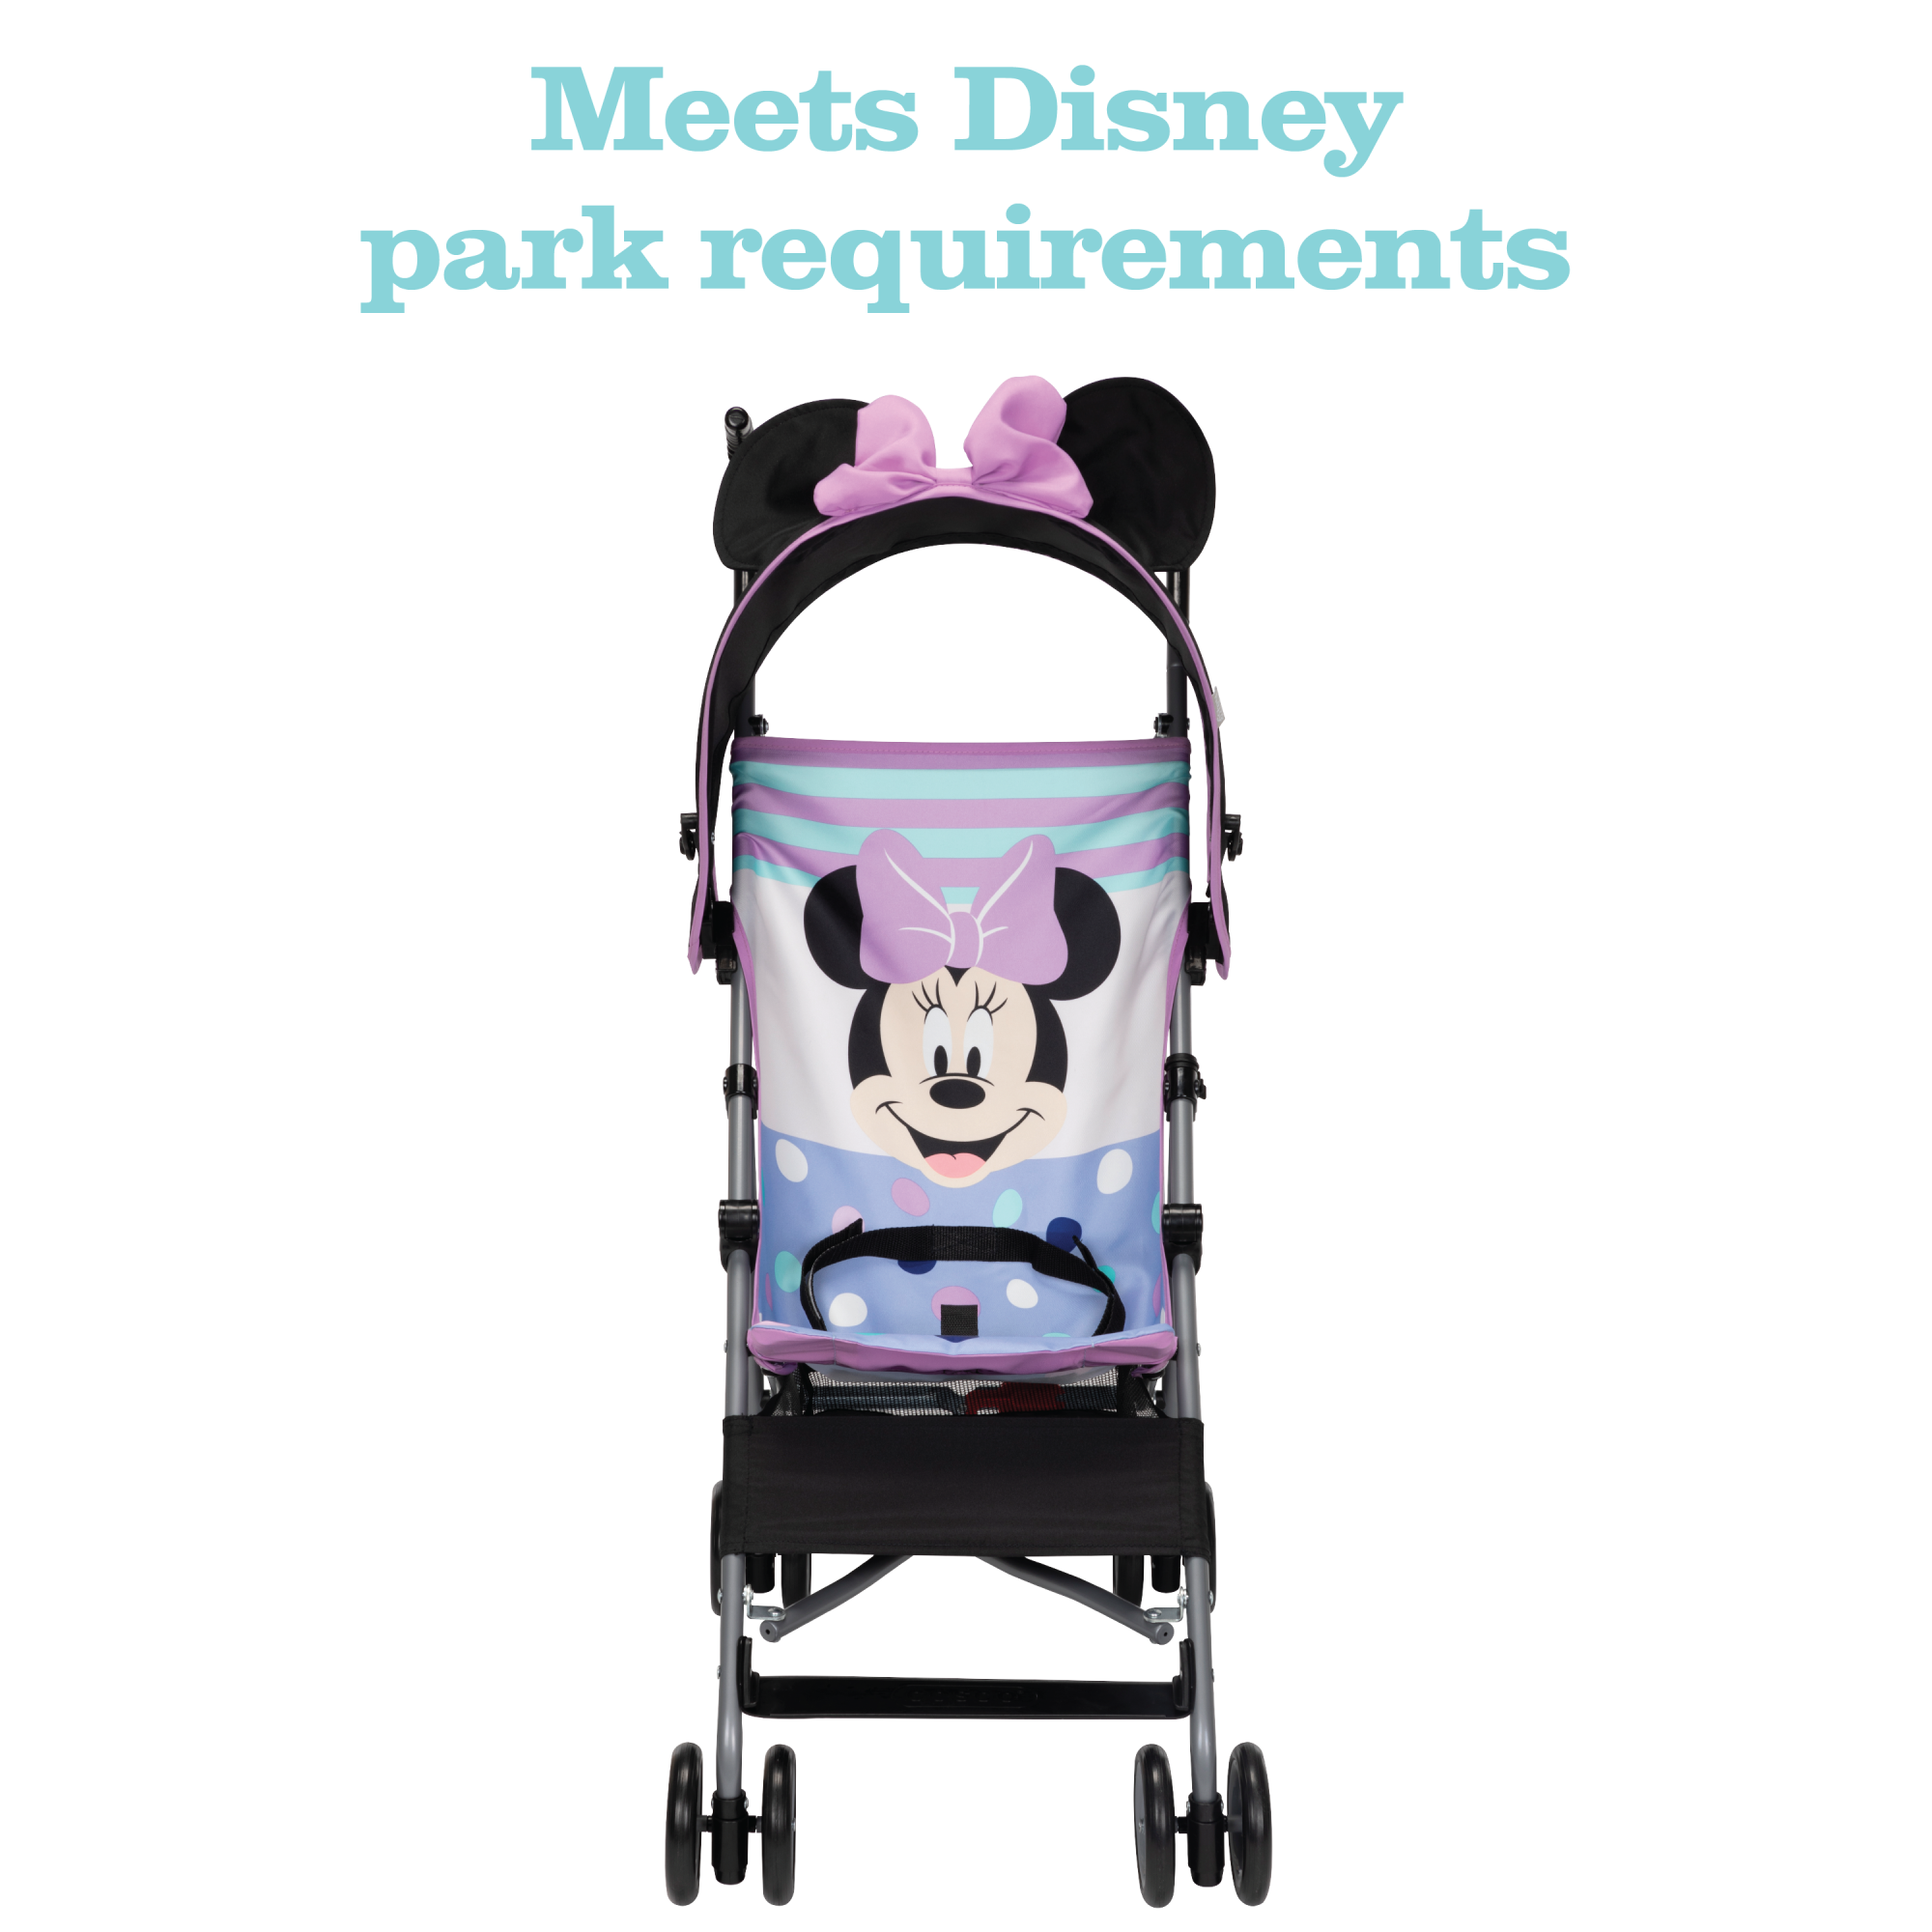 Disney Baby Character Umbrella Stroller - meets Disney park requirements